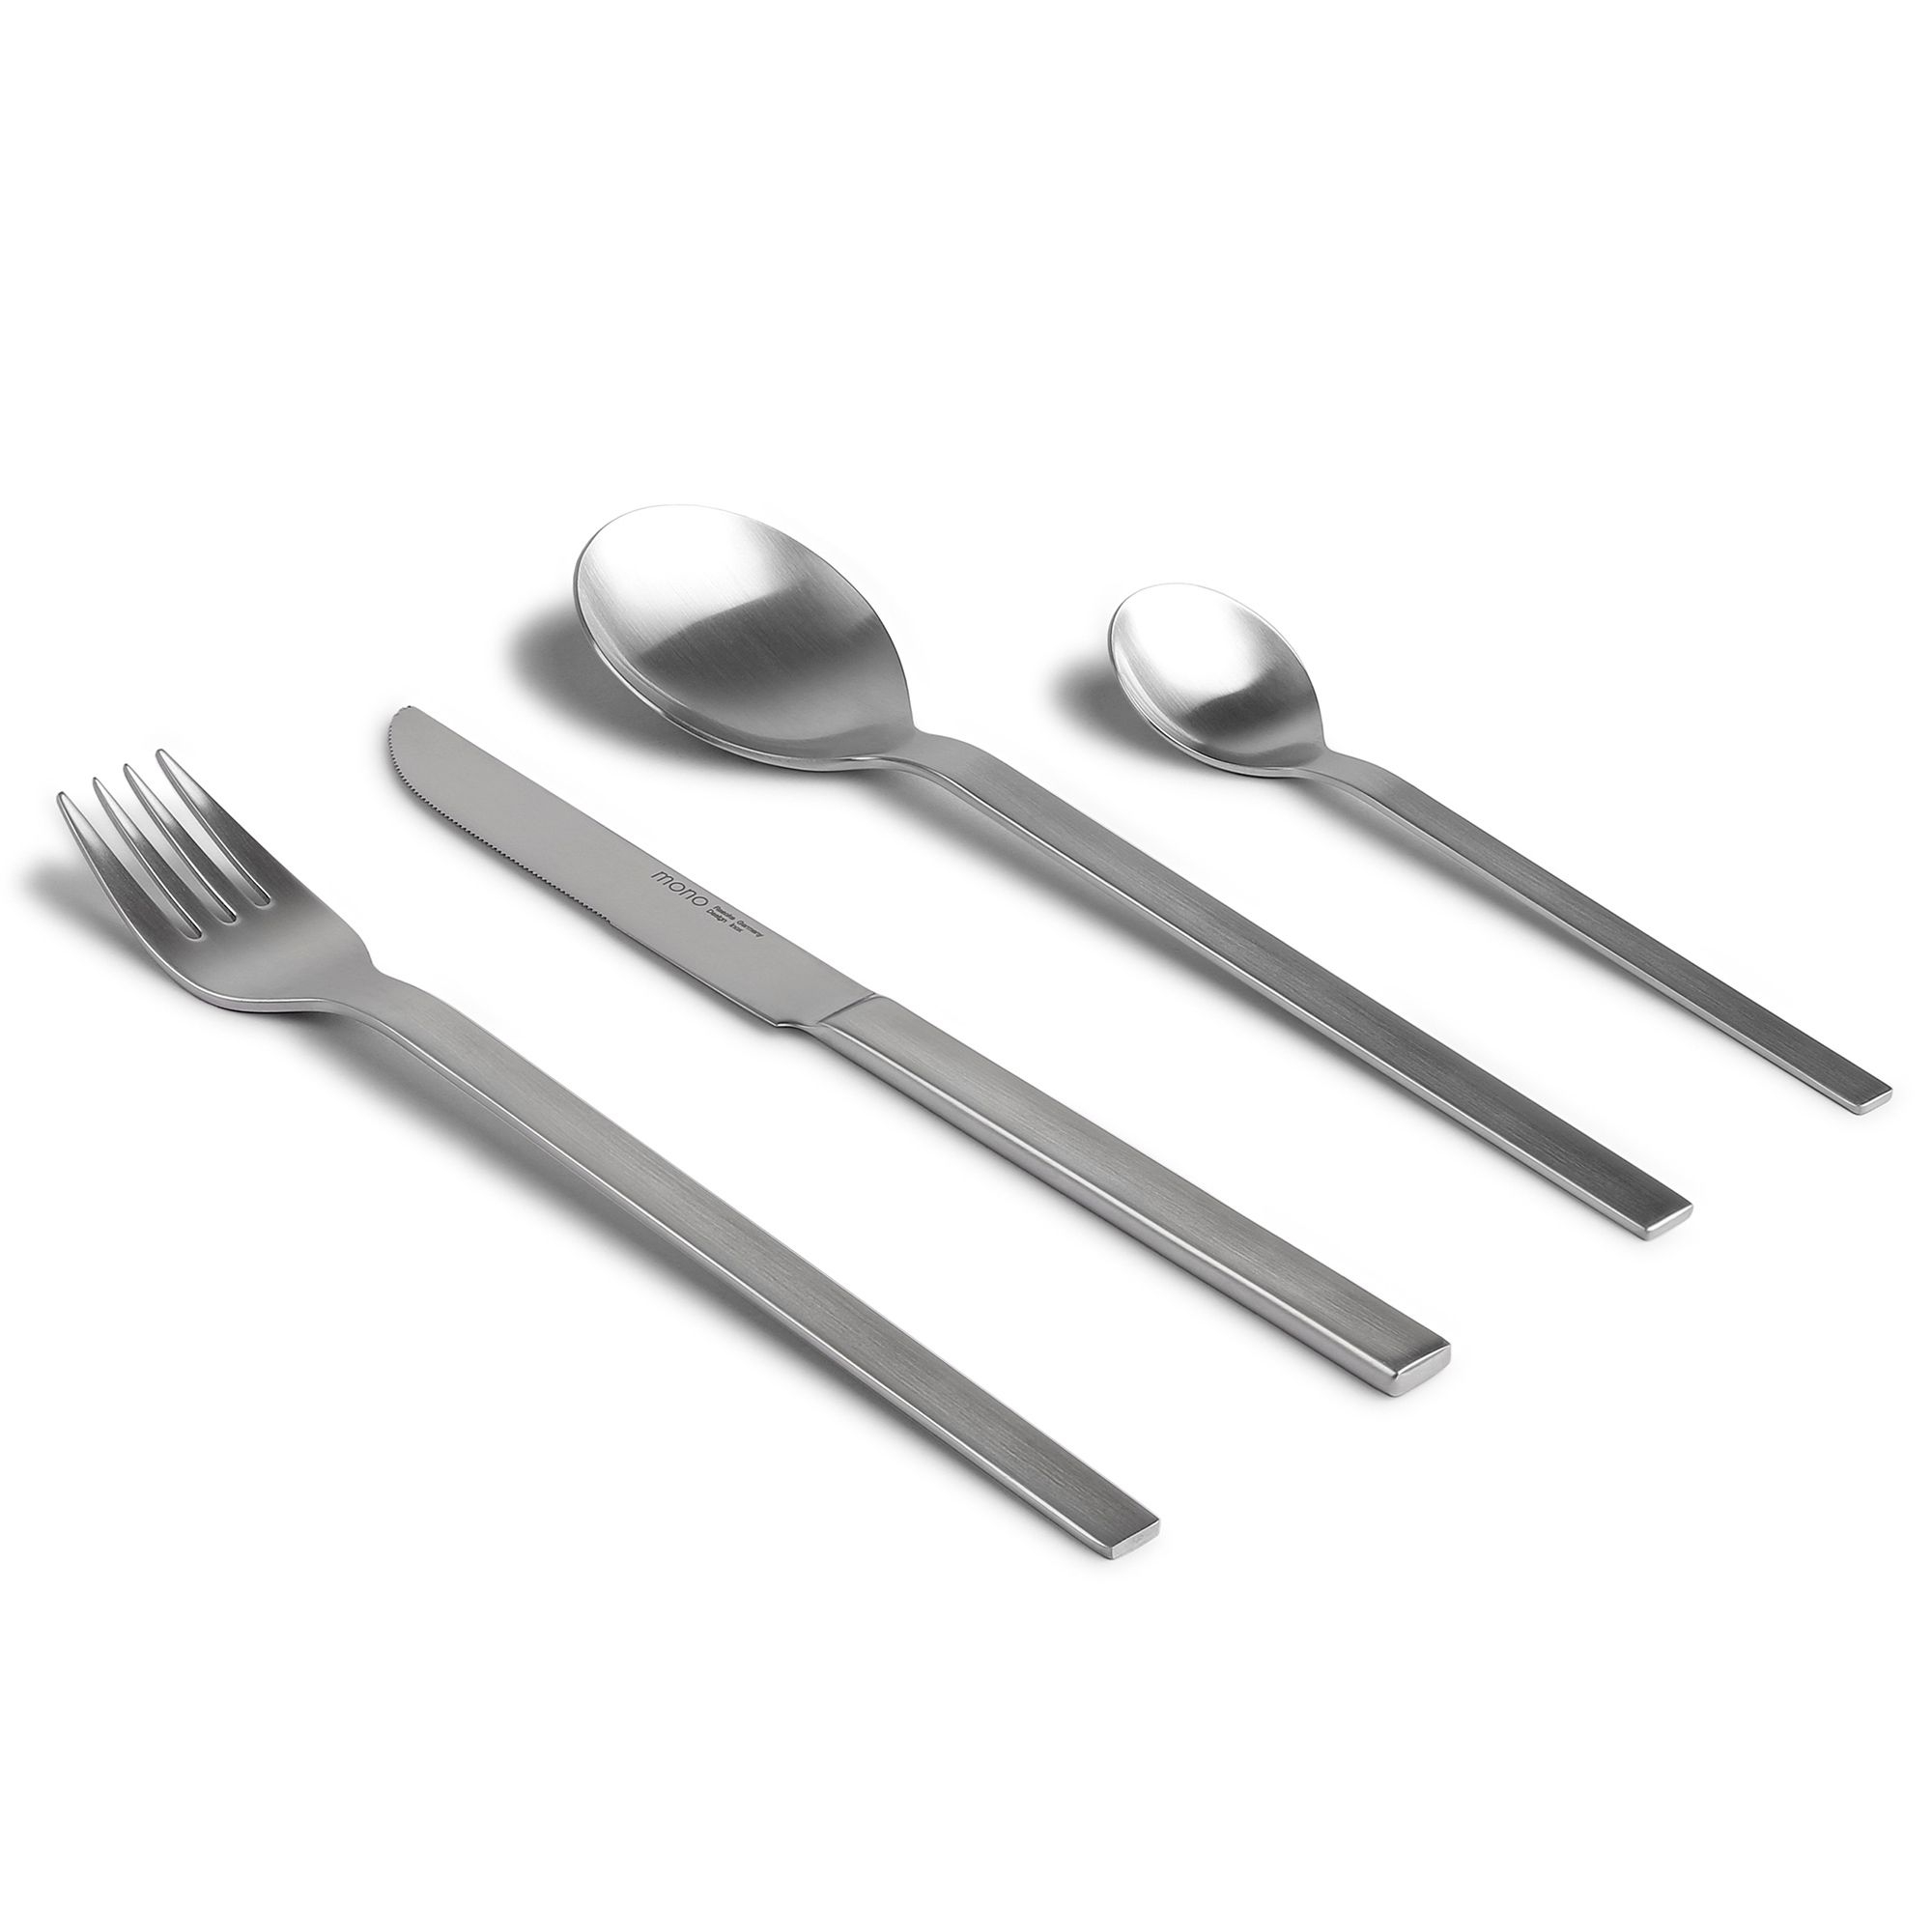 mono-a - Cutlery set, 4 pcs. - with long blade